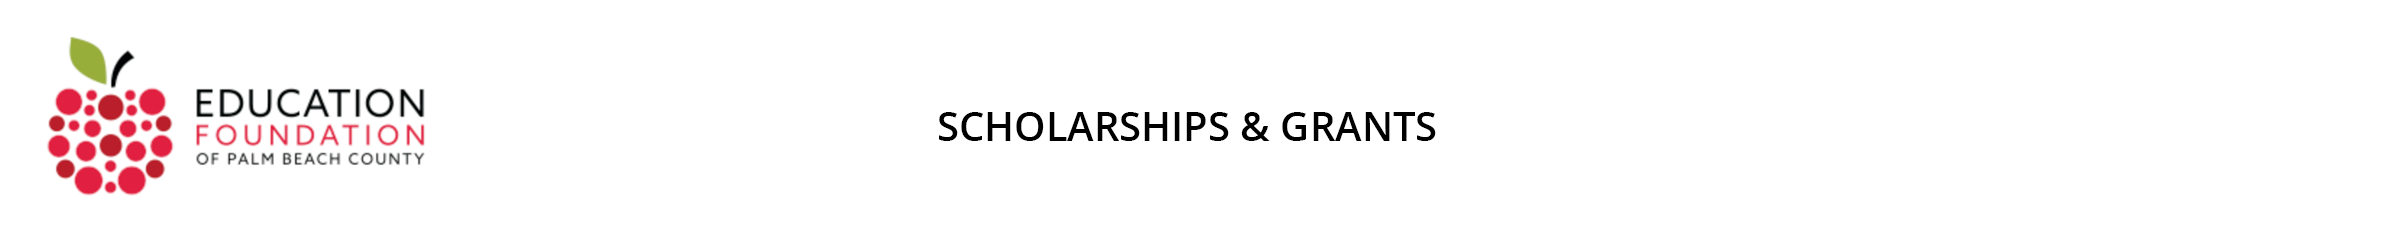 Education Foundation of Palm Beach County Scholarships & Grants logo